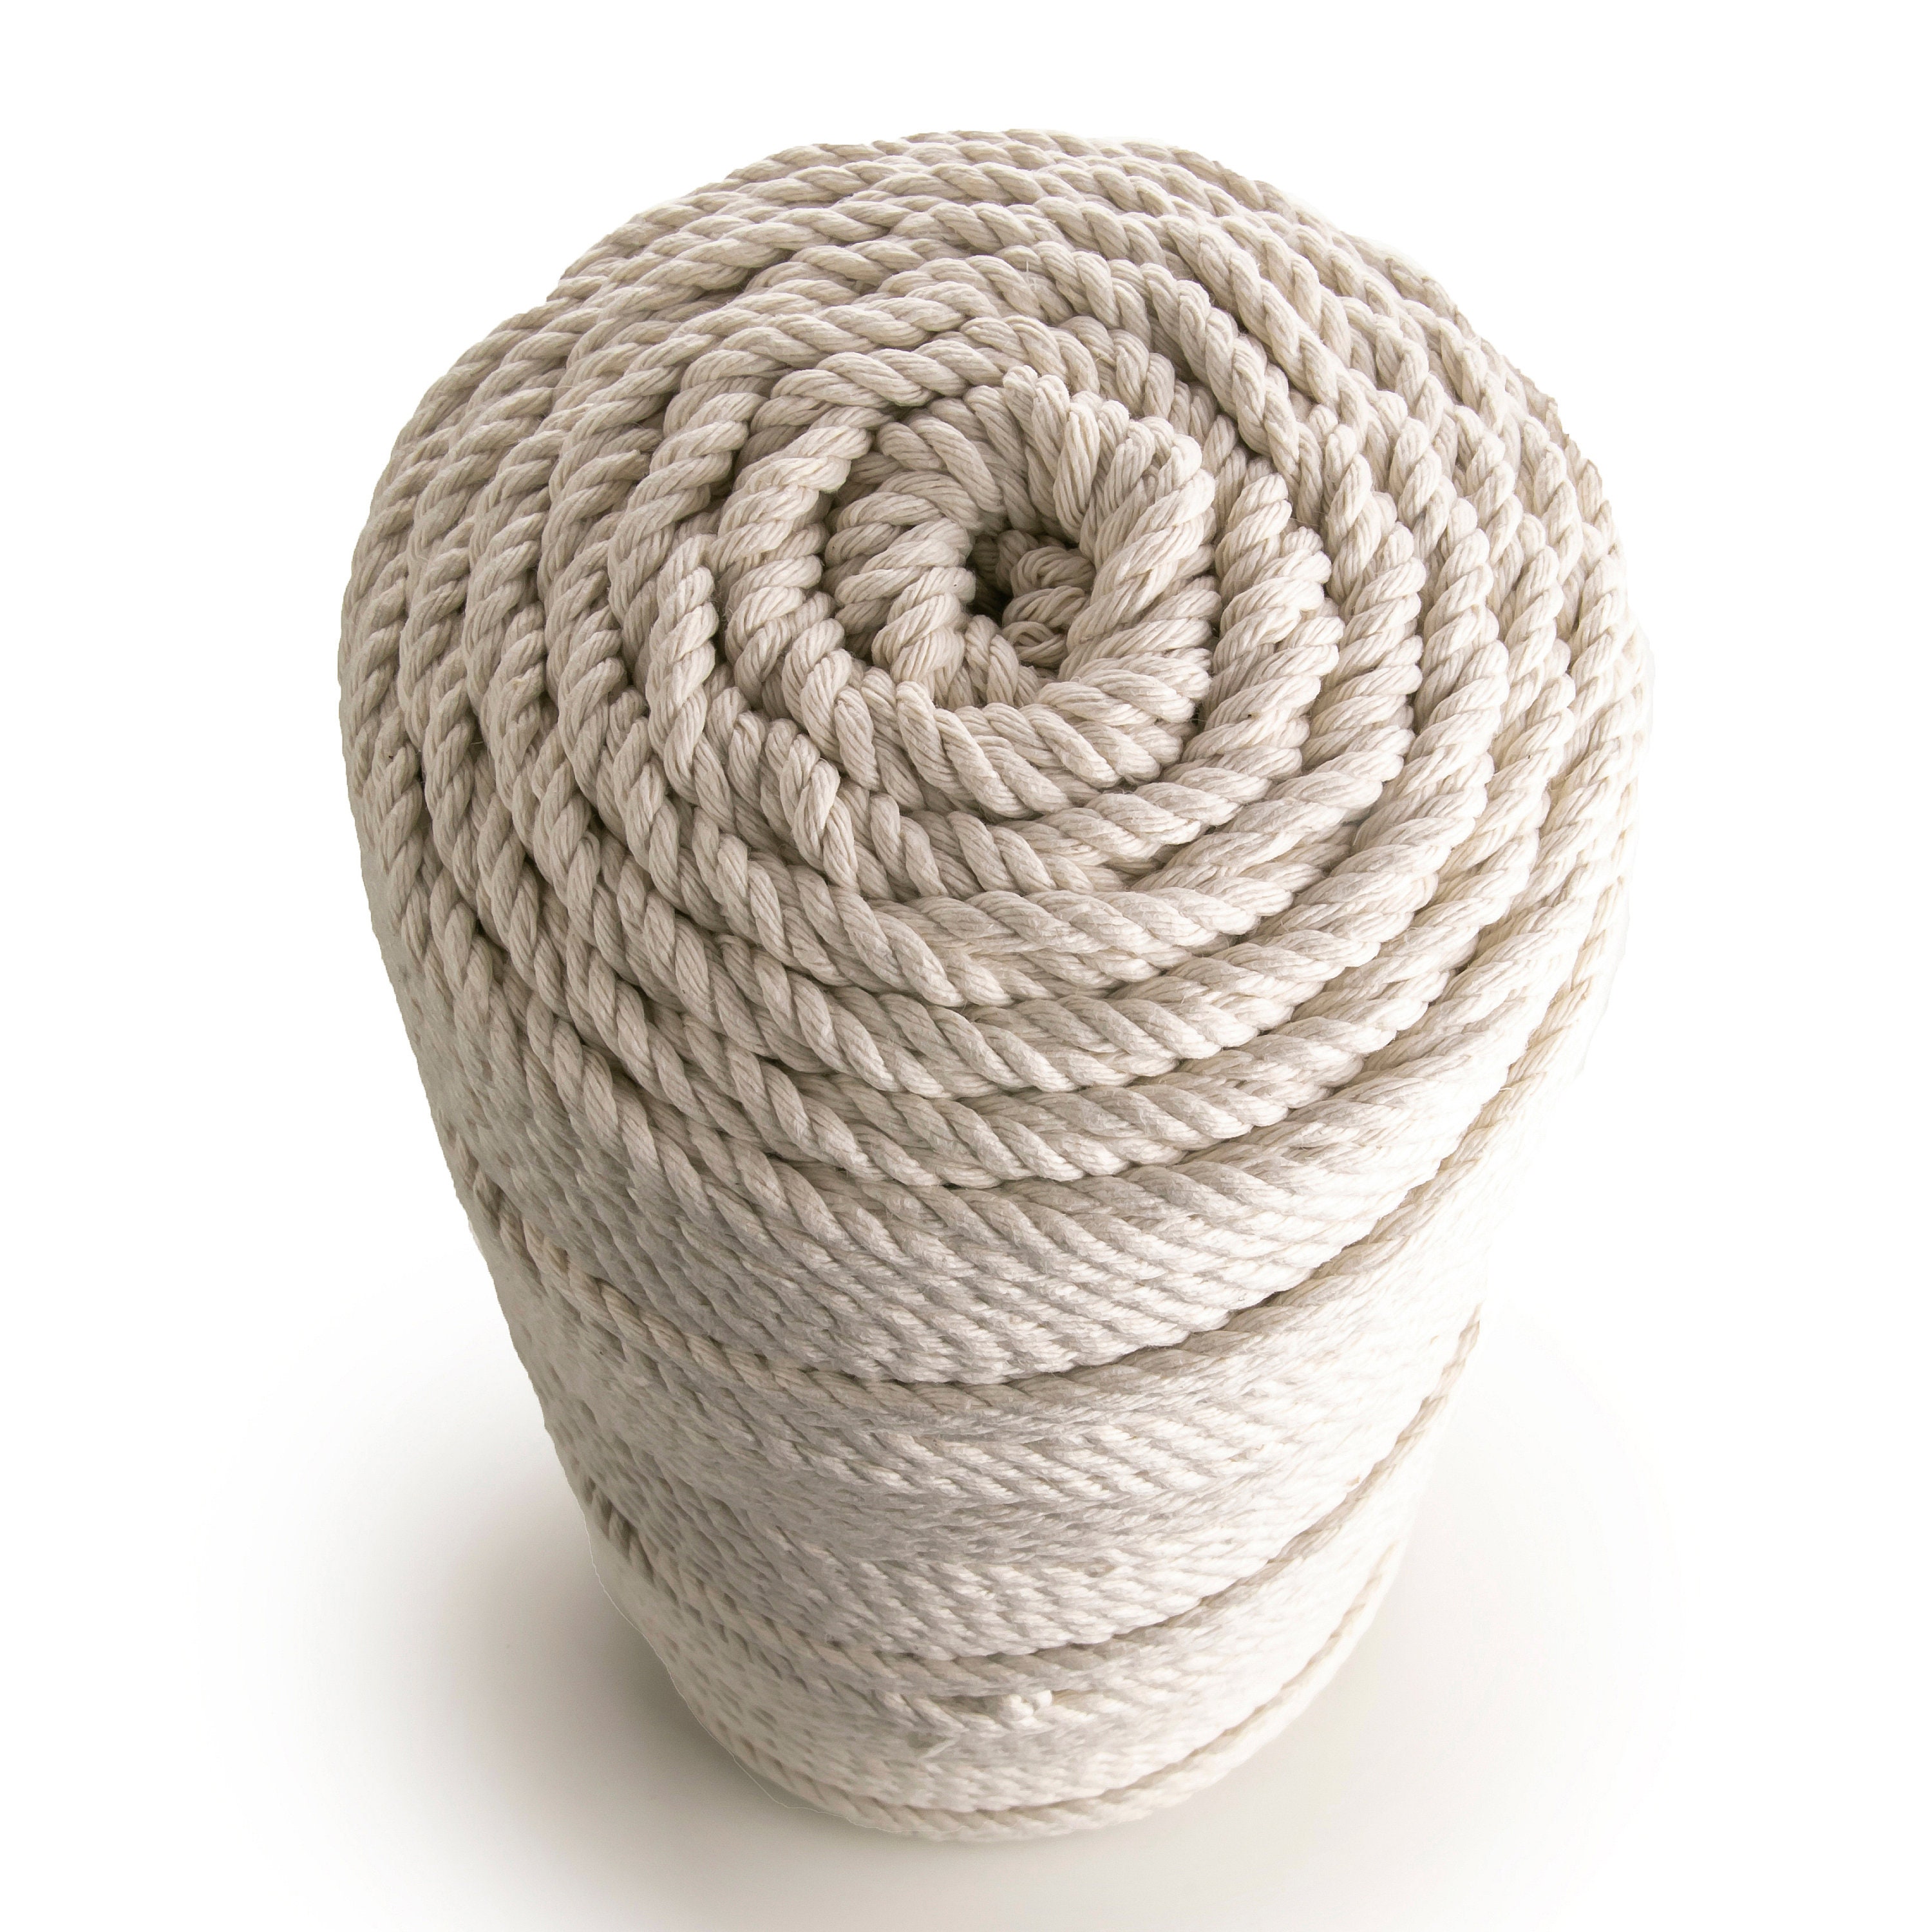 3 Mm Macrame Cord 3kg / 520 M, Soft Twisted Cotton Rope, Macrame